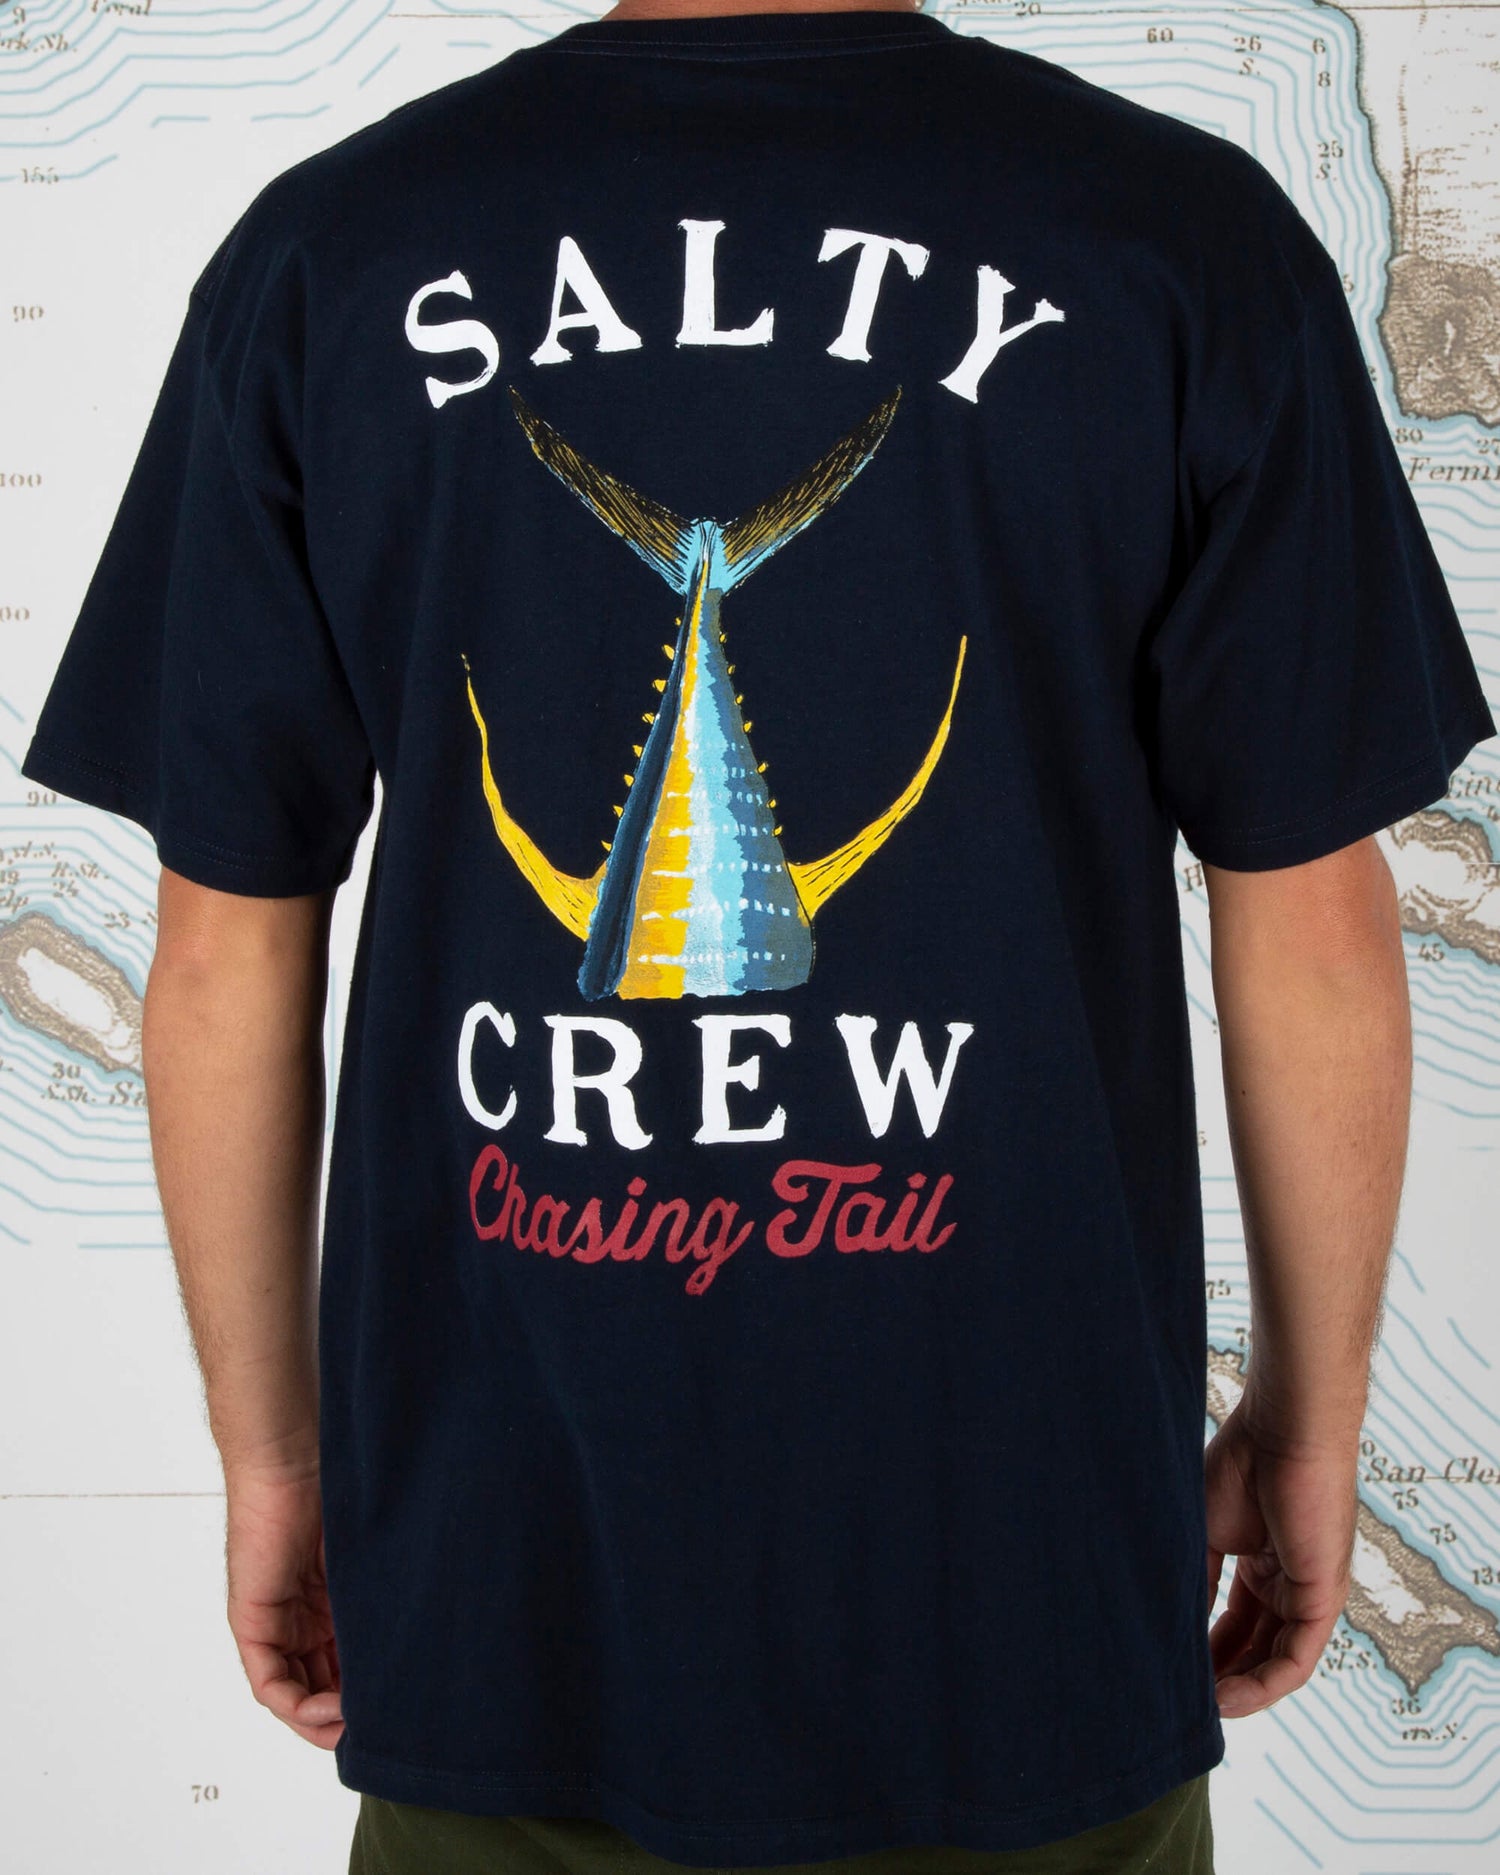 Salty crew Men's Tees Tailed Navy Standard S/S Tee in Navy